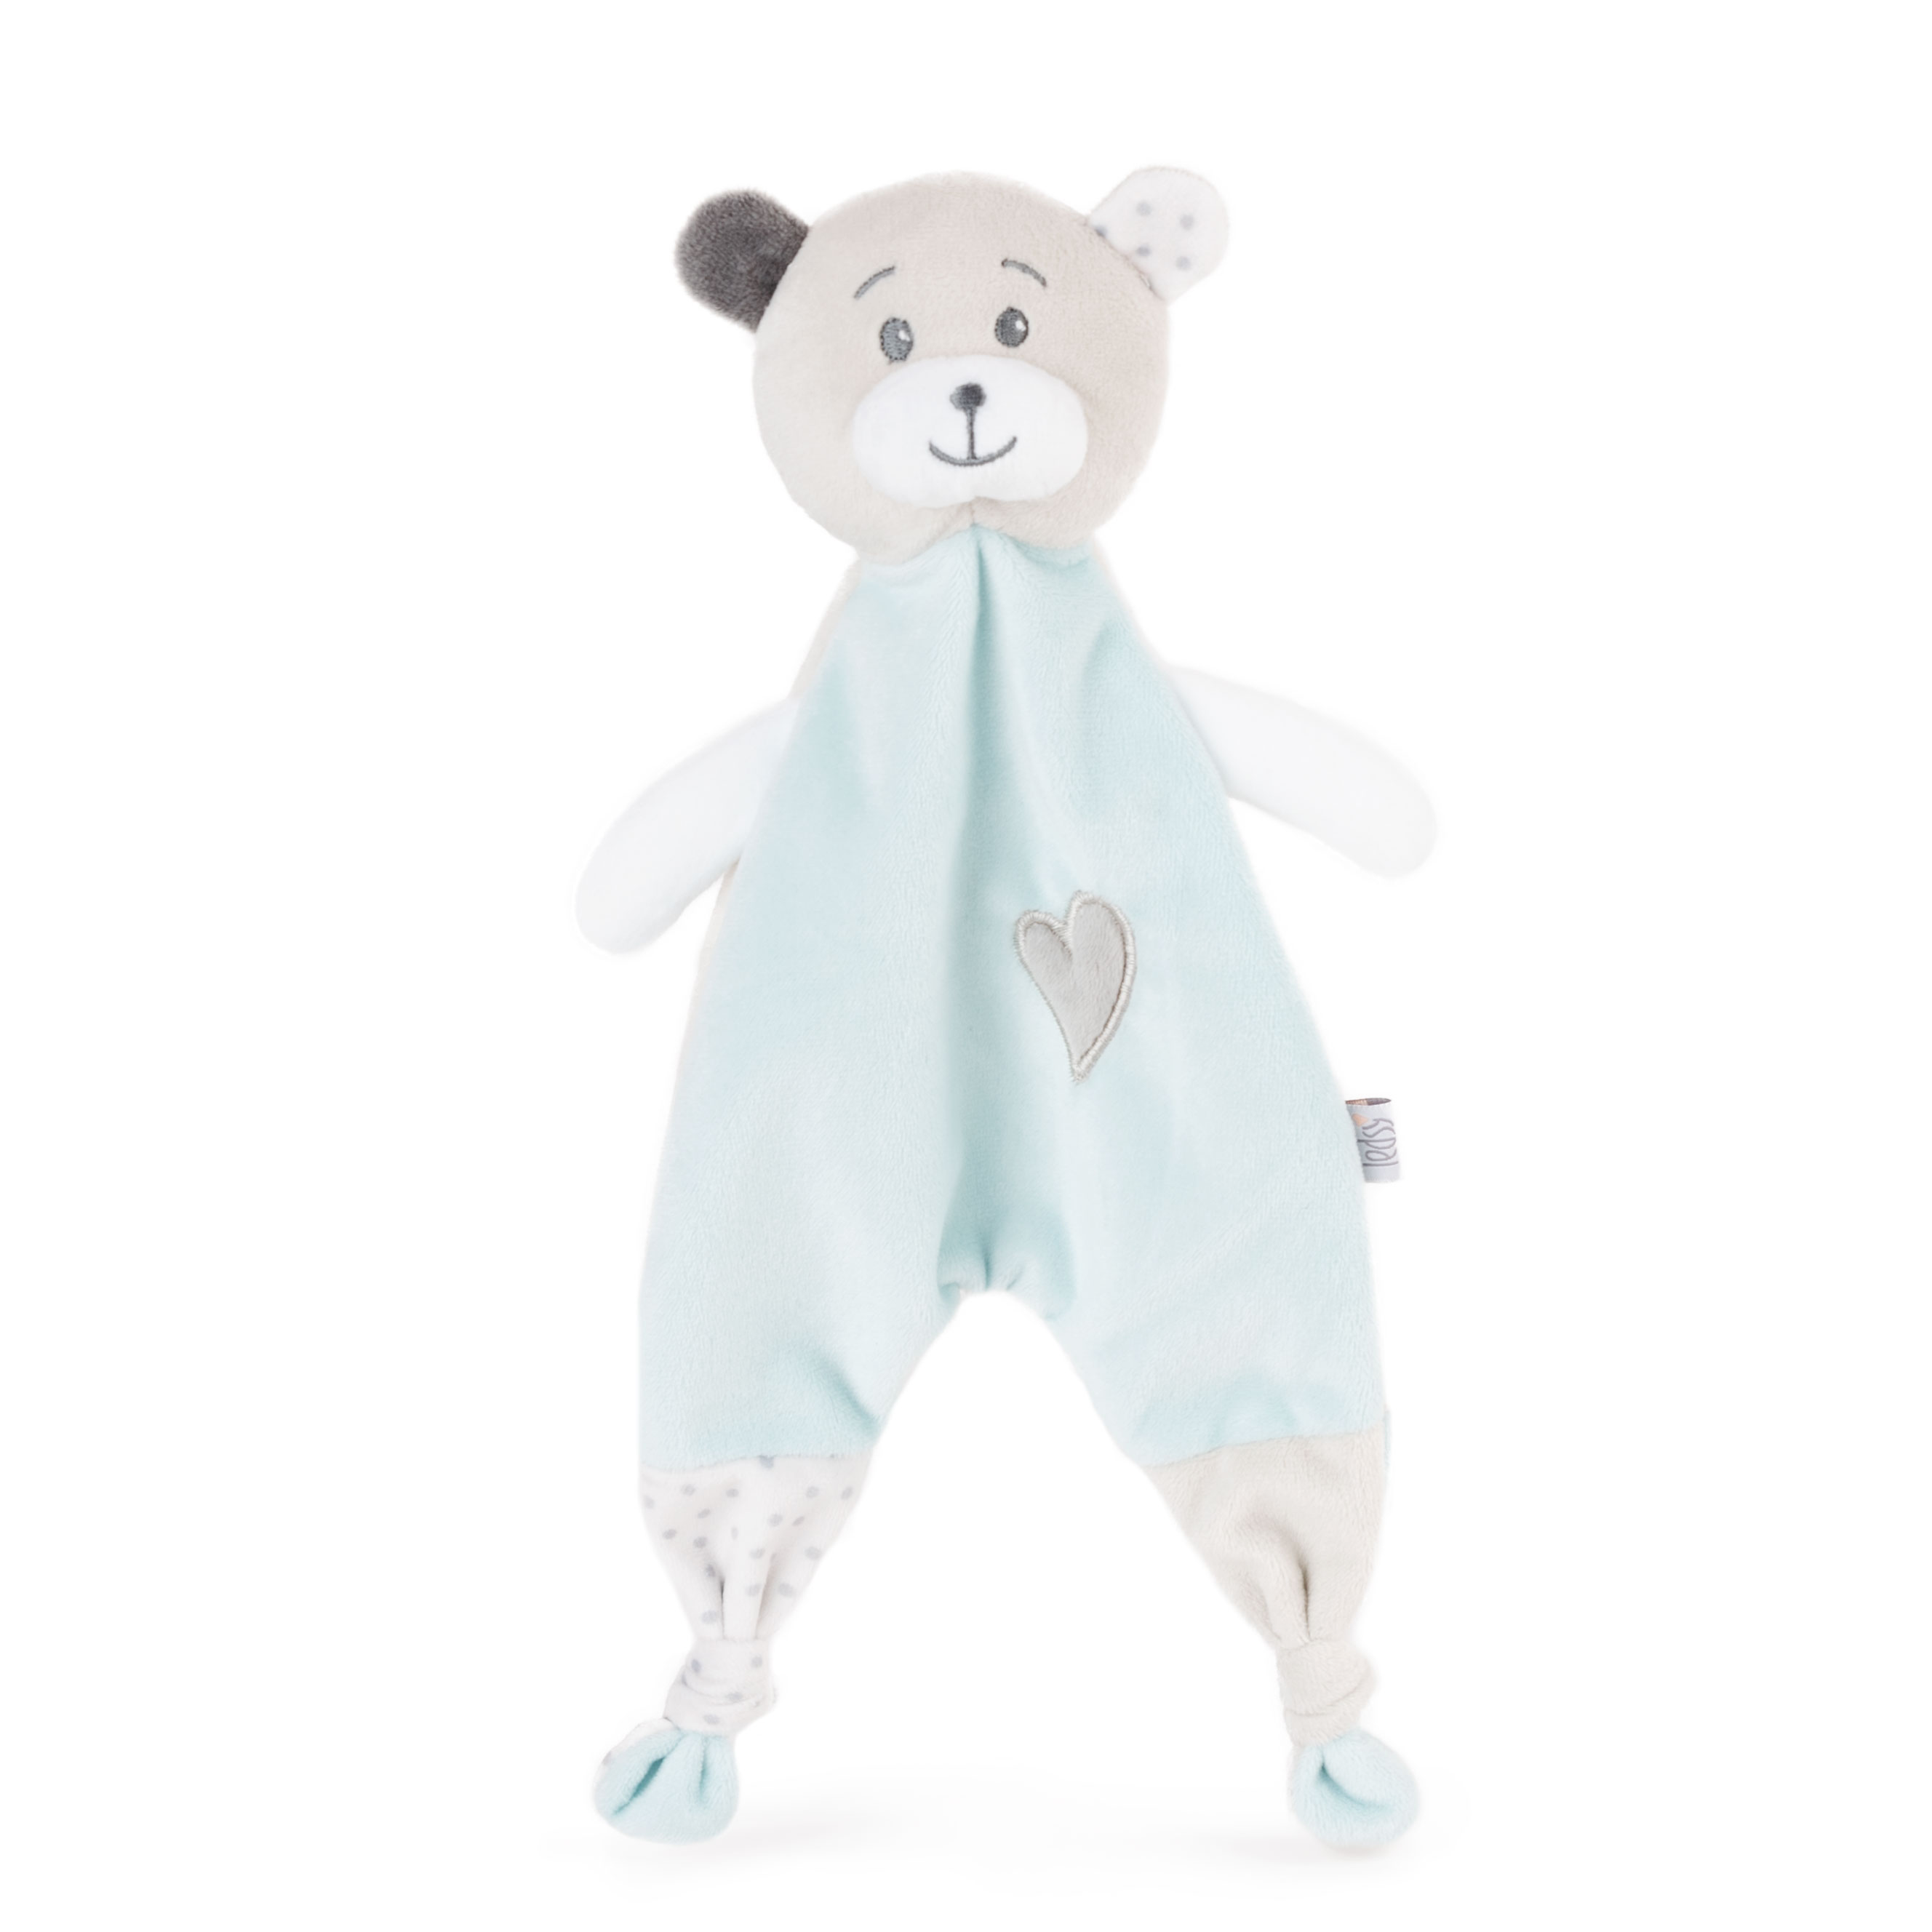 Soft toy bear - Blue